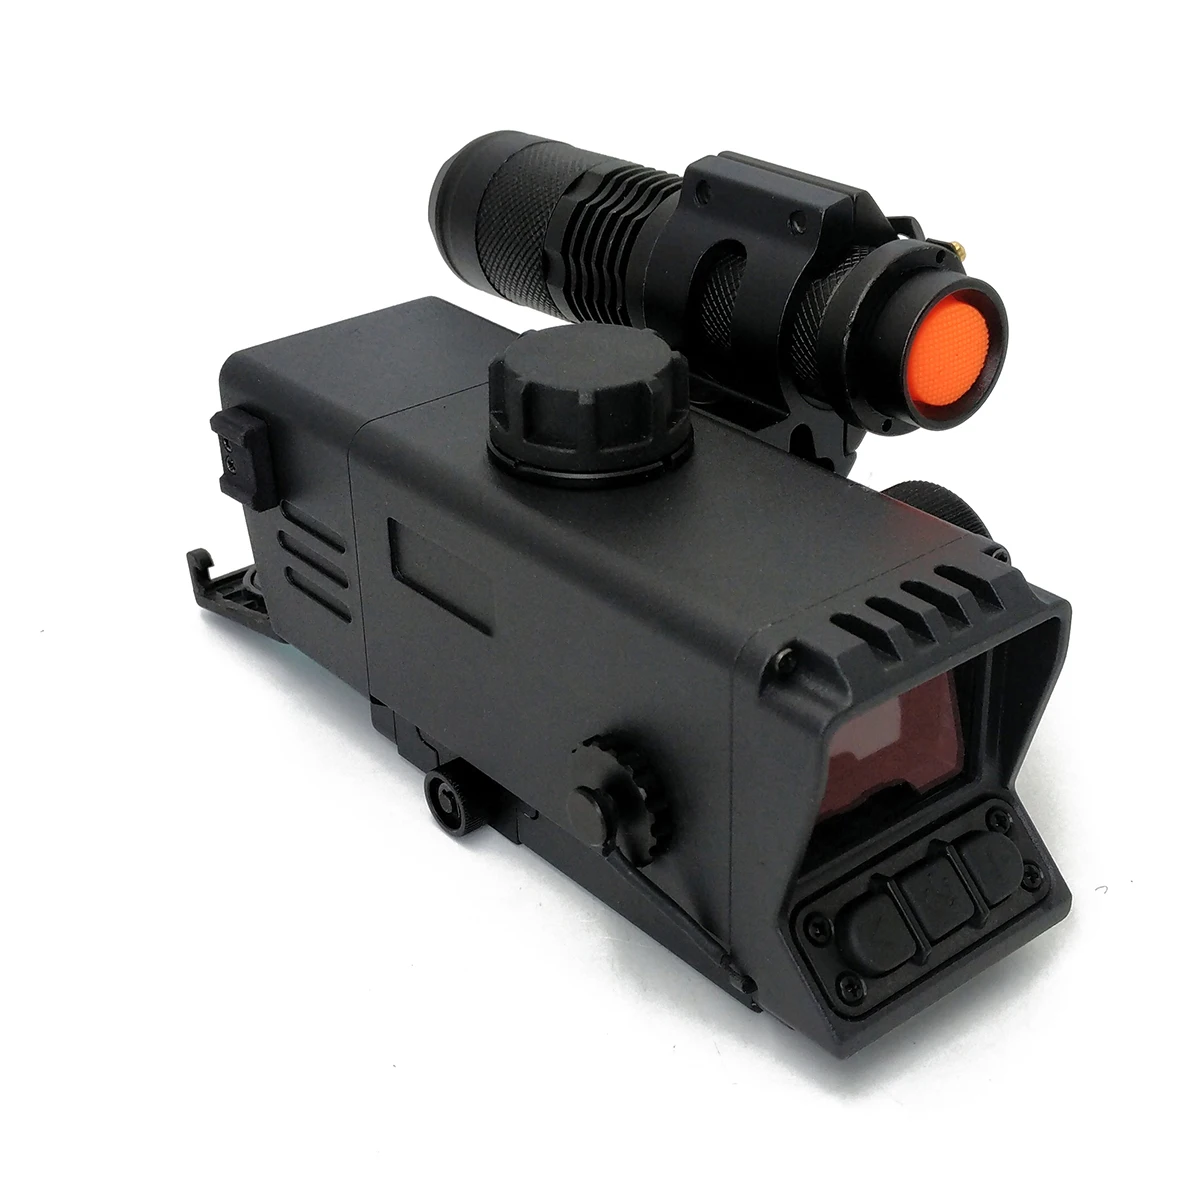 Airsoft Gun Scope Laser, Hunting Riflescope Infrared